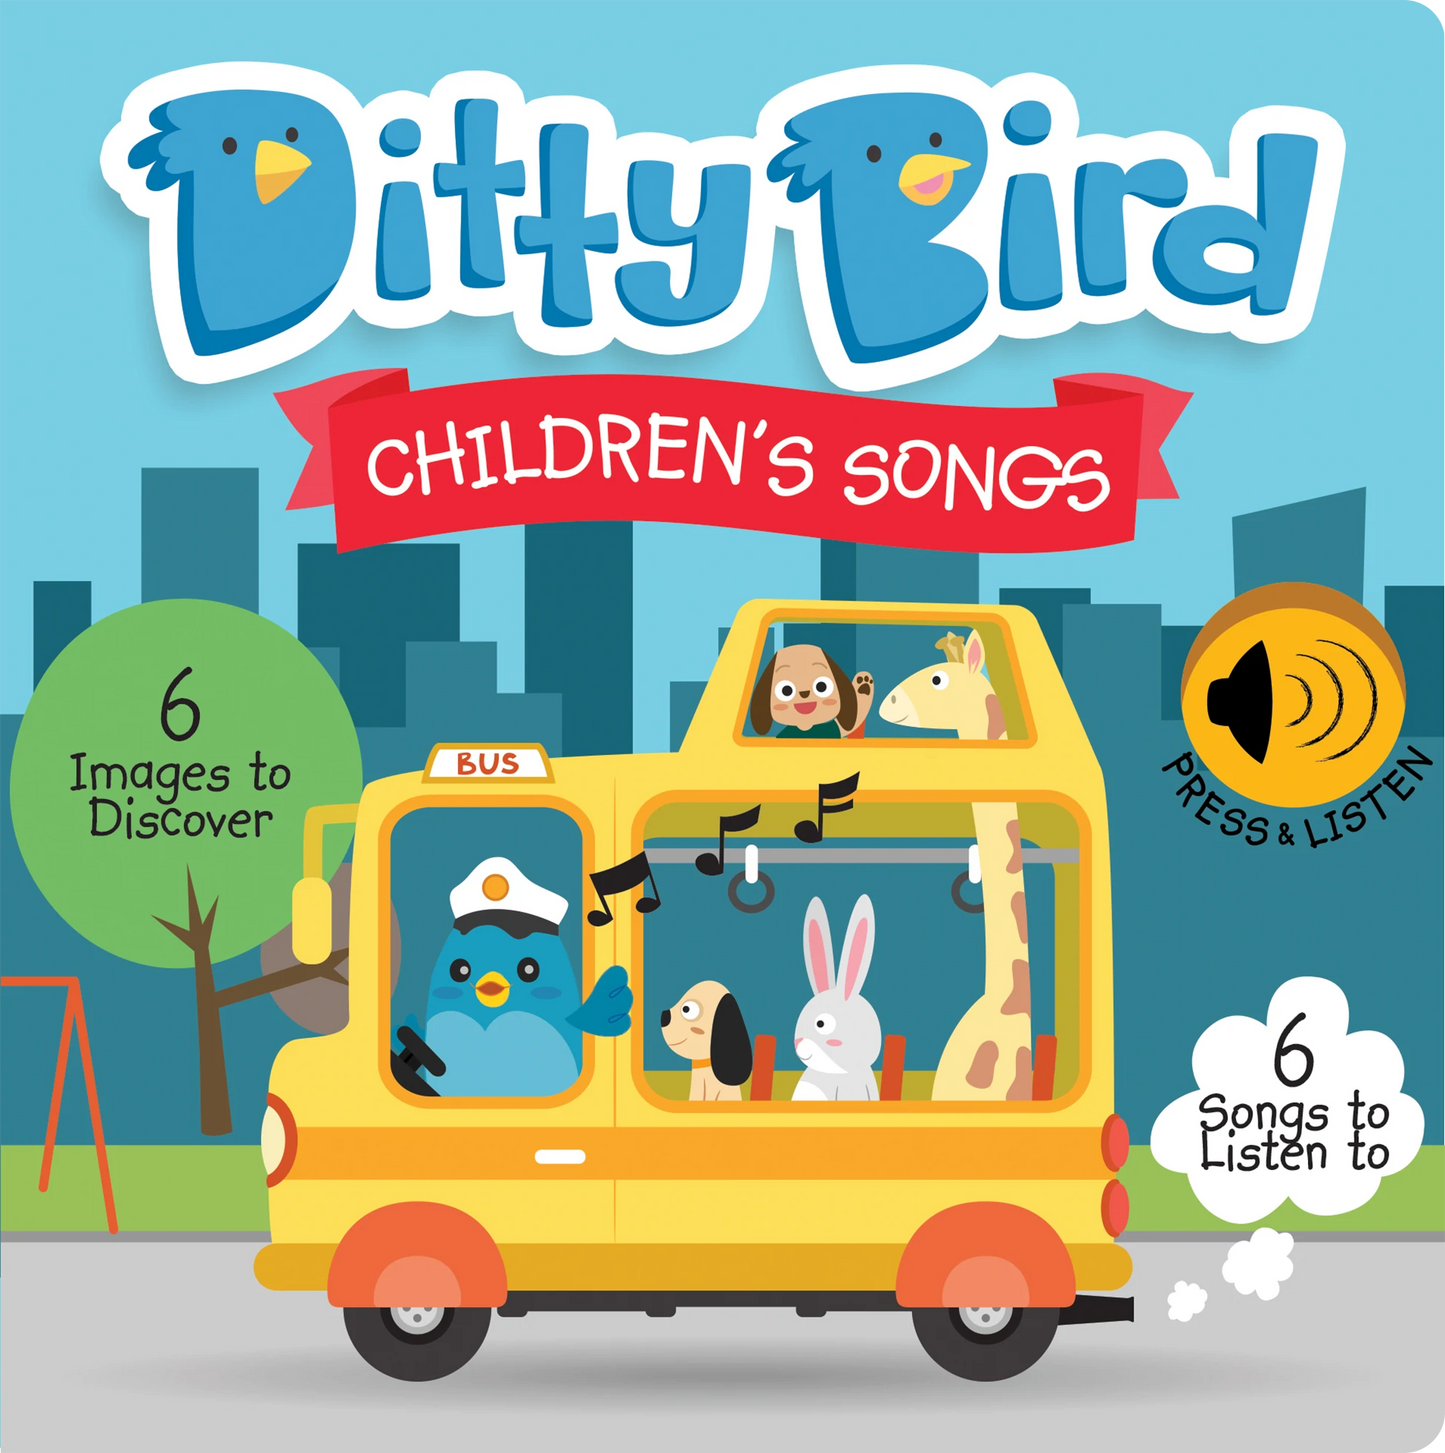 ✅Ditty Bird Children’s Songs